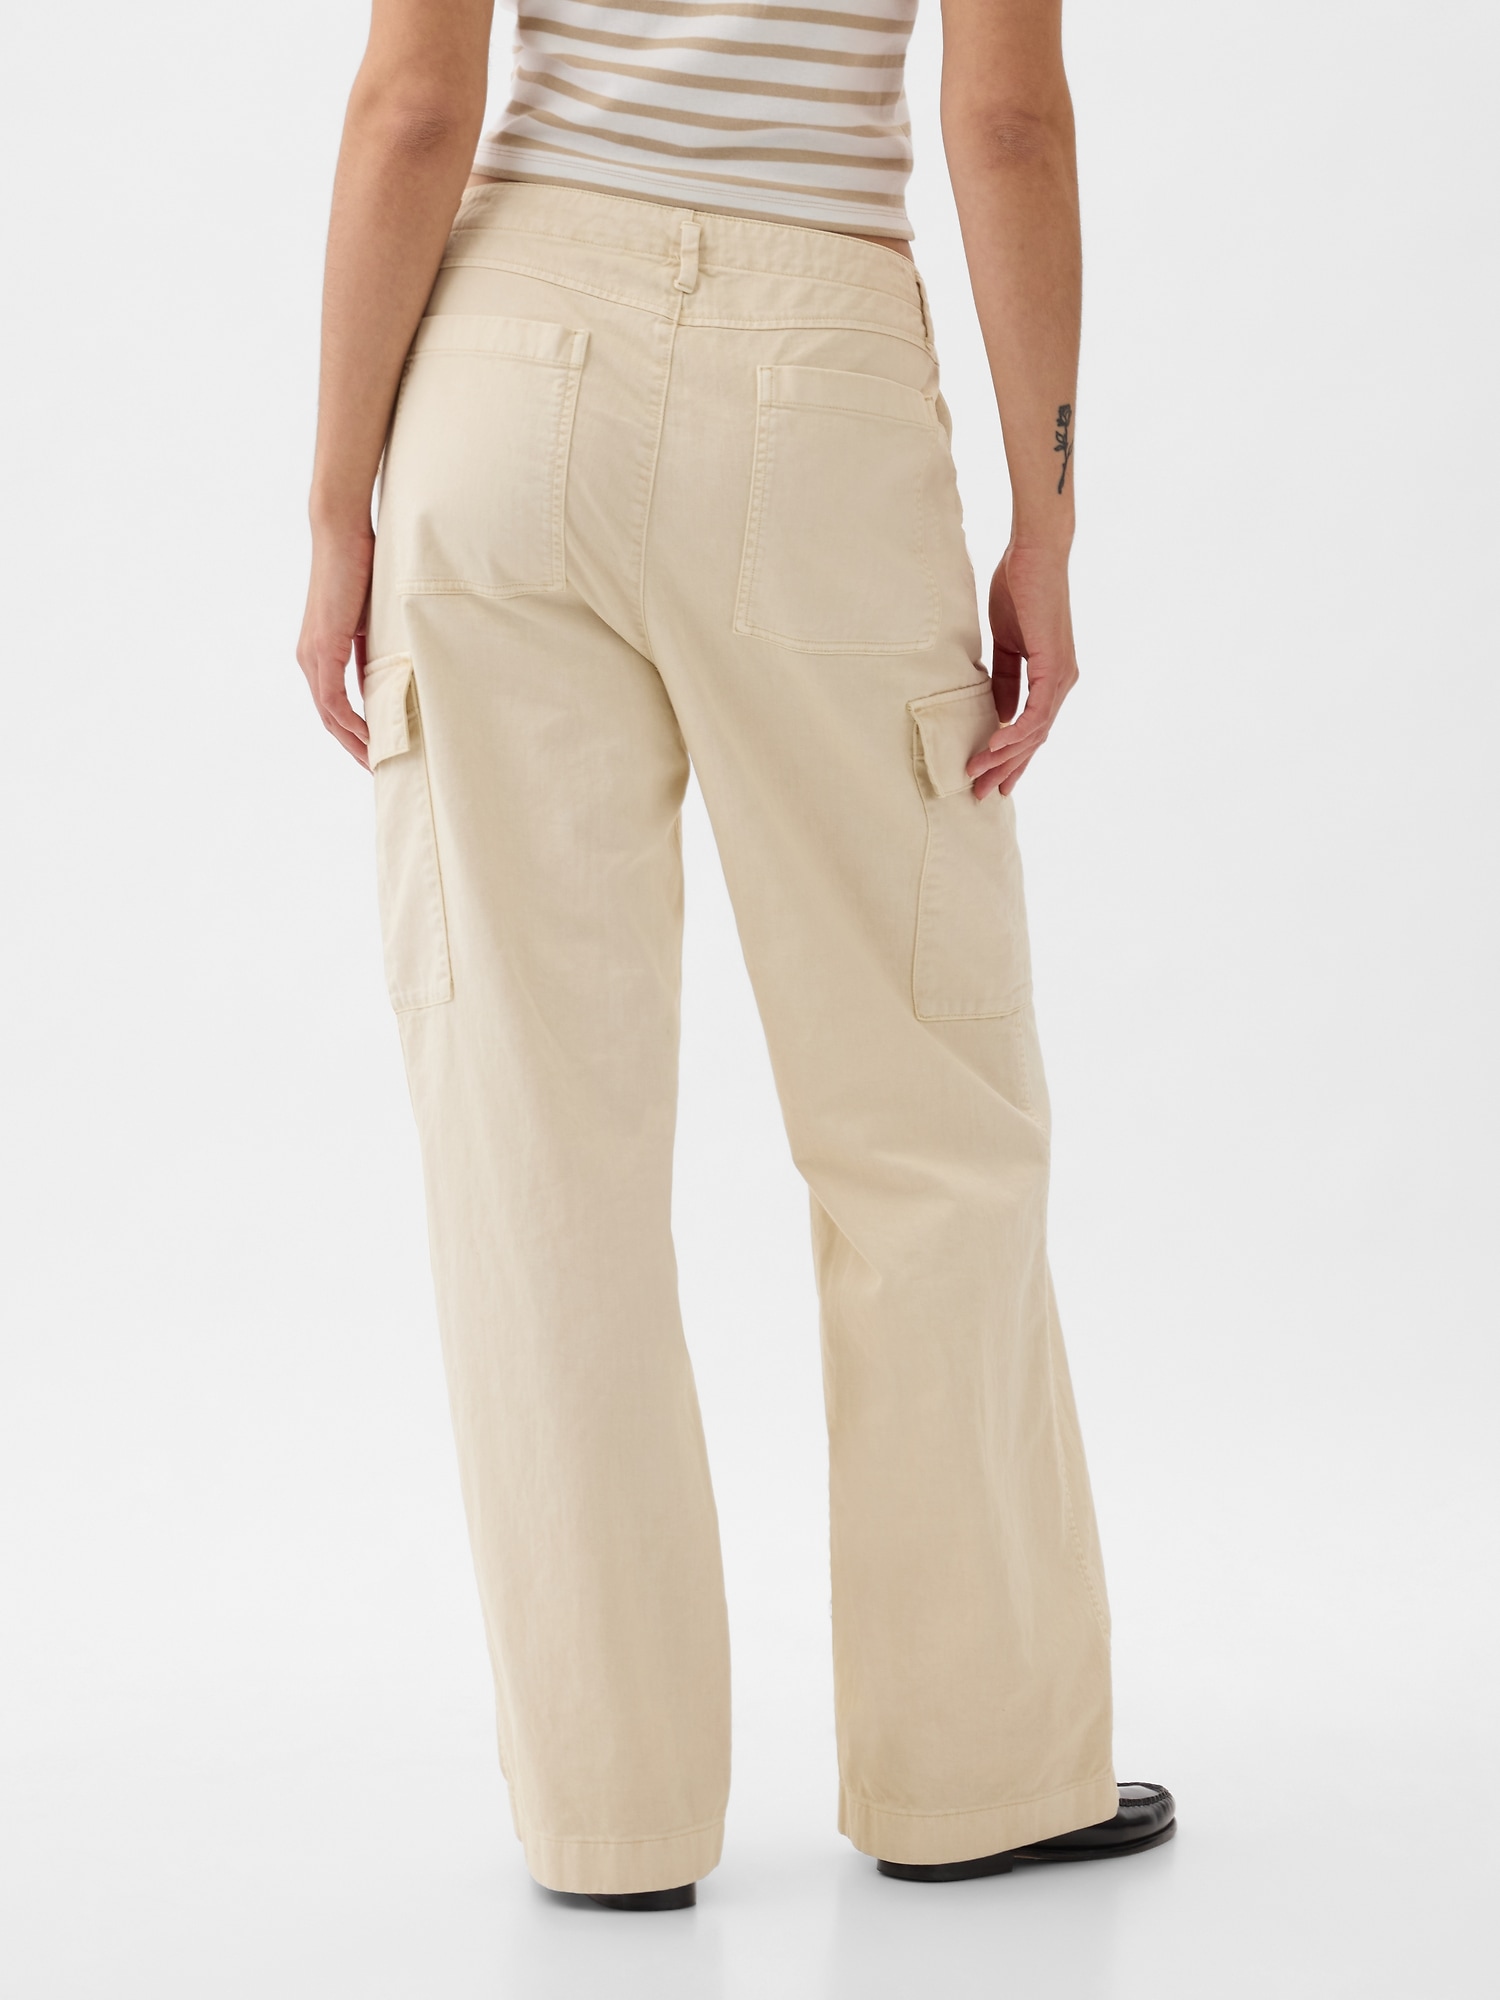 Khaki 6 Pocket Cargo Pants, Women's Fashion, Bottoms, Jeans on